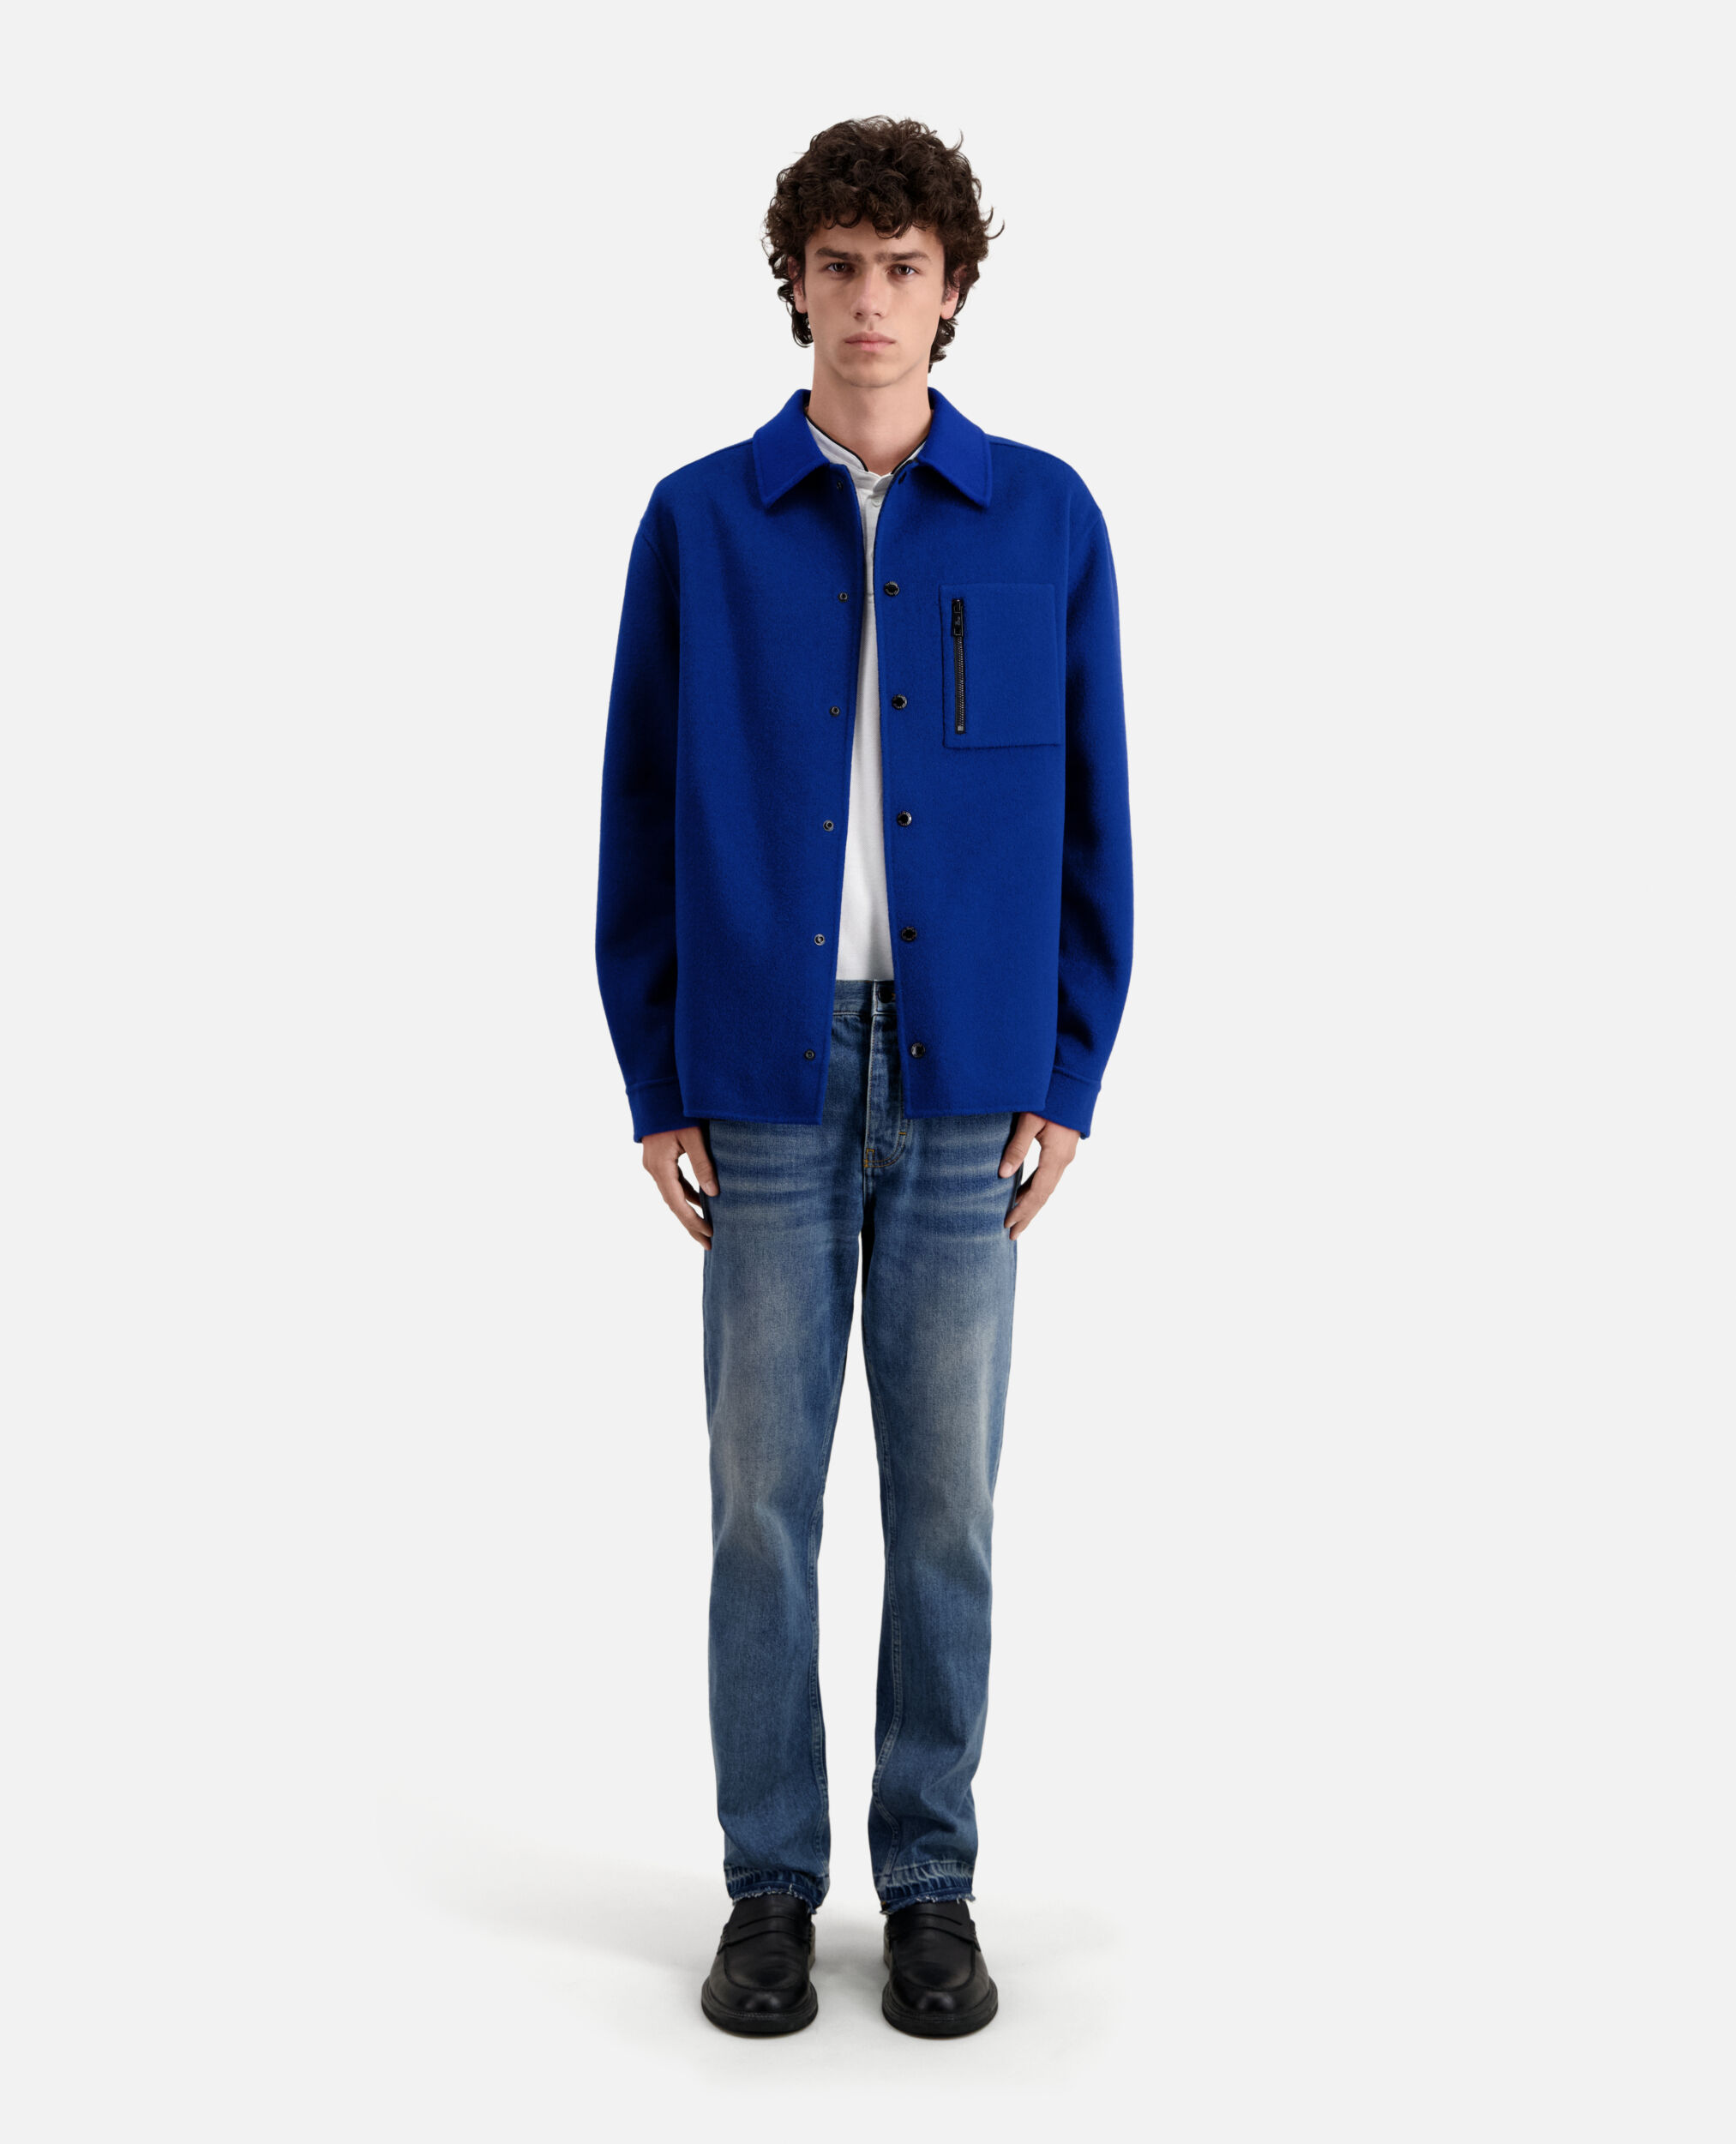 Blue wool-blend overshirt jacket, ROYAL BLUE - DARK NAVY, hi-res image number null